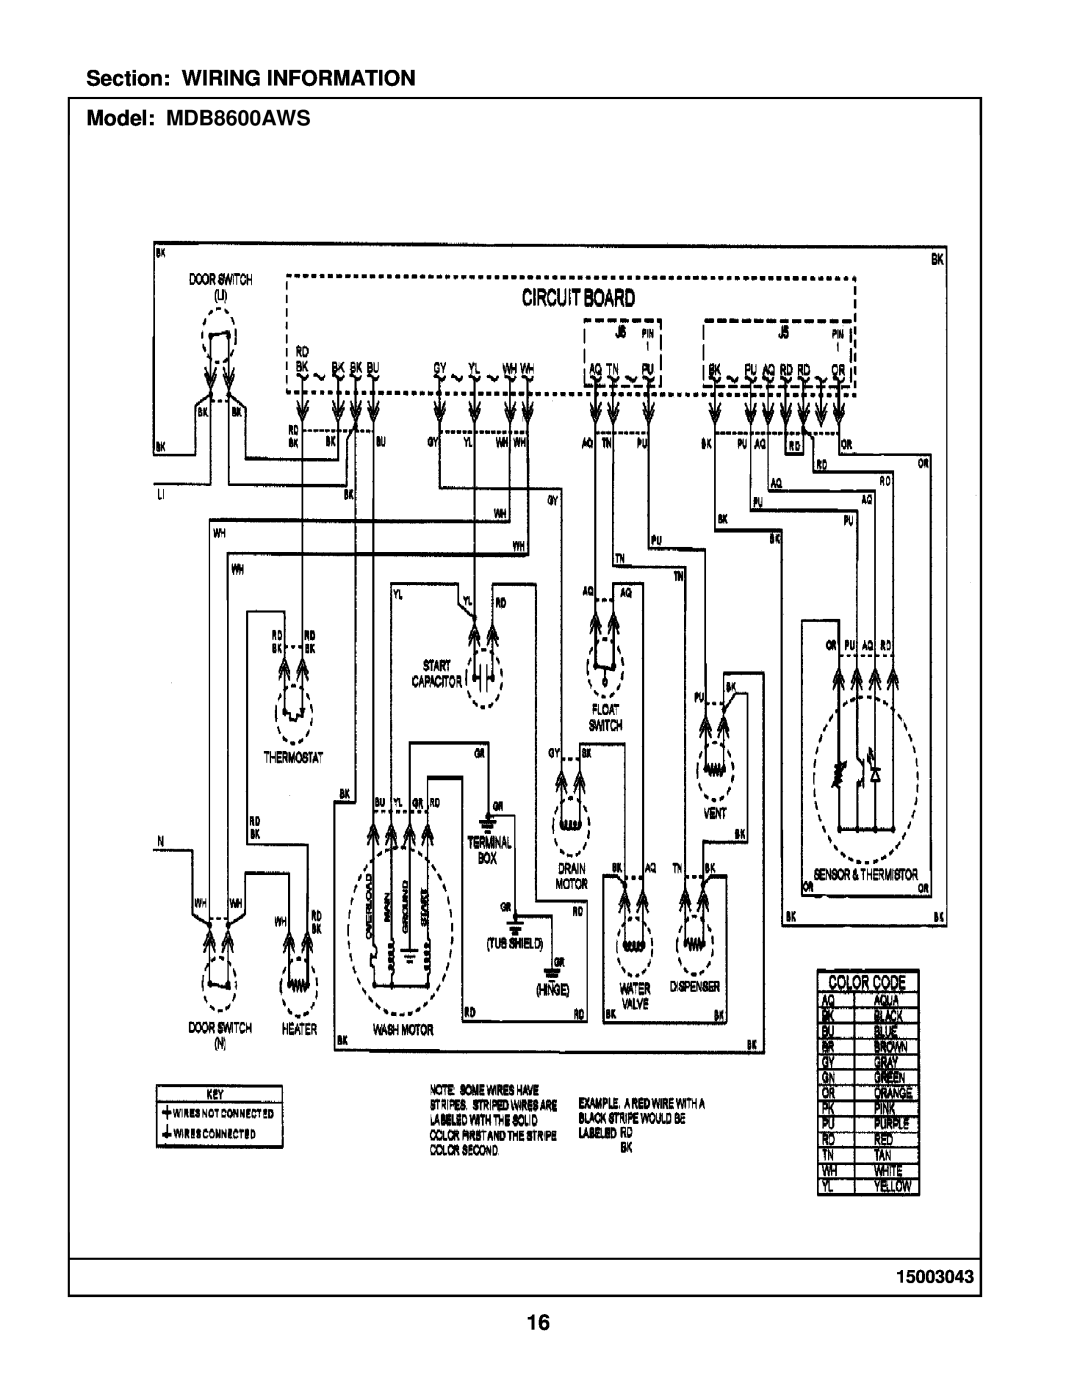 Maytag manual Section WIRING INFORMATION Model MDB8600AWS, 15003043 